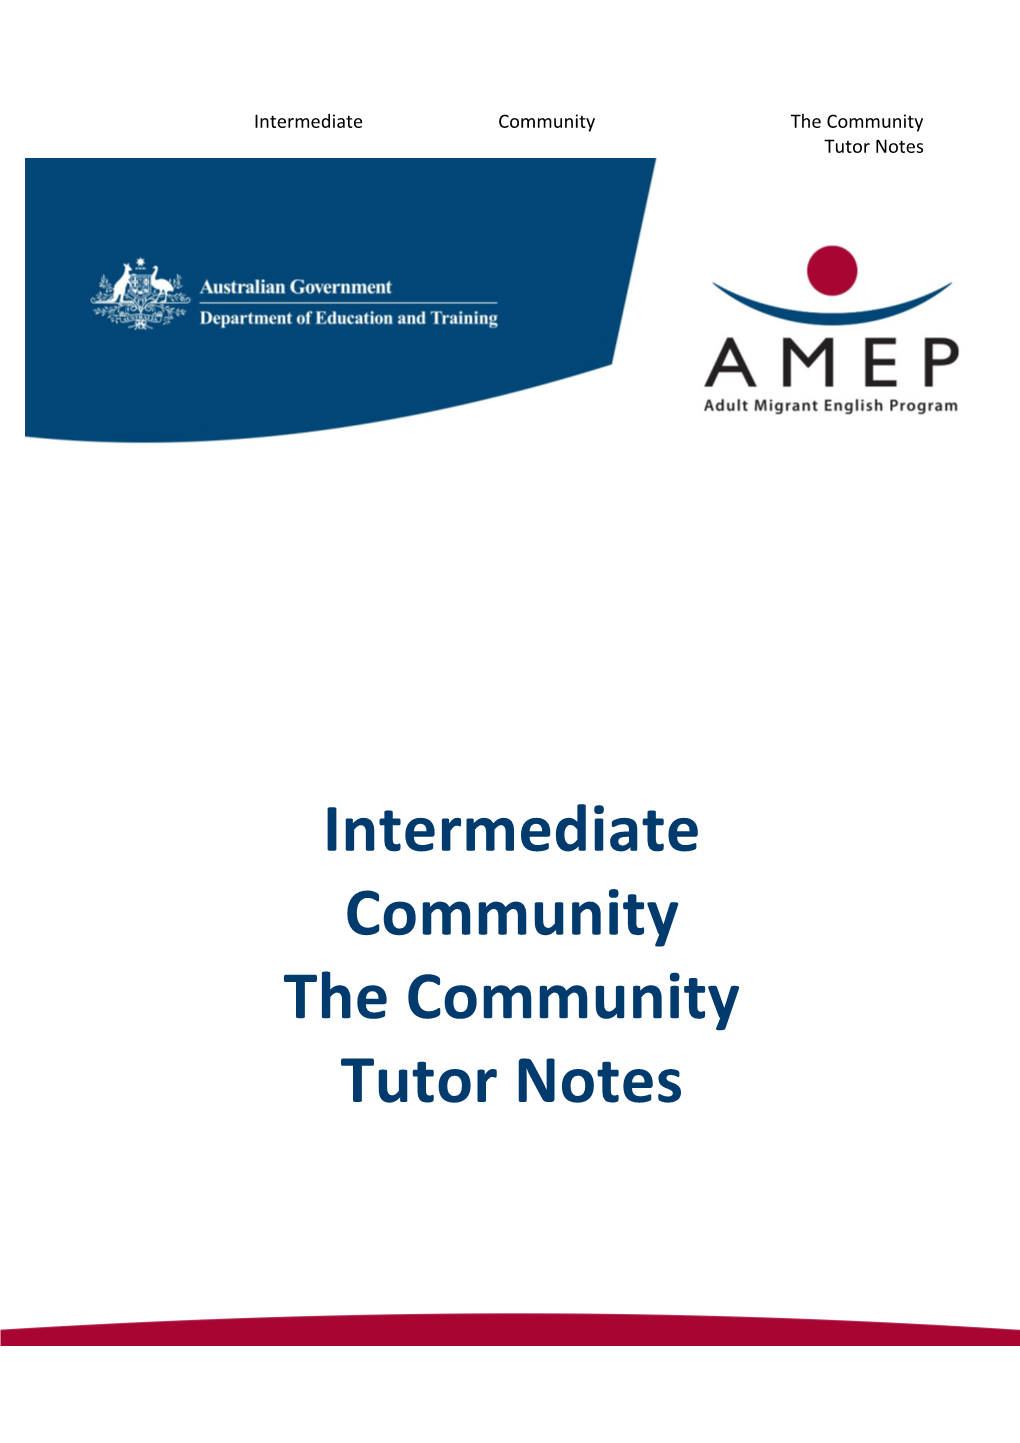 Intermediate Community the Community Tutor Notes